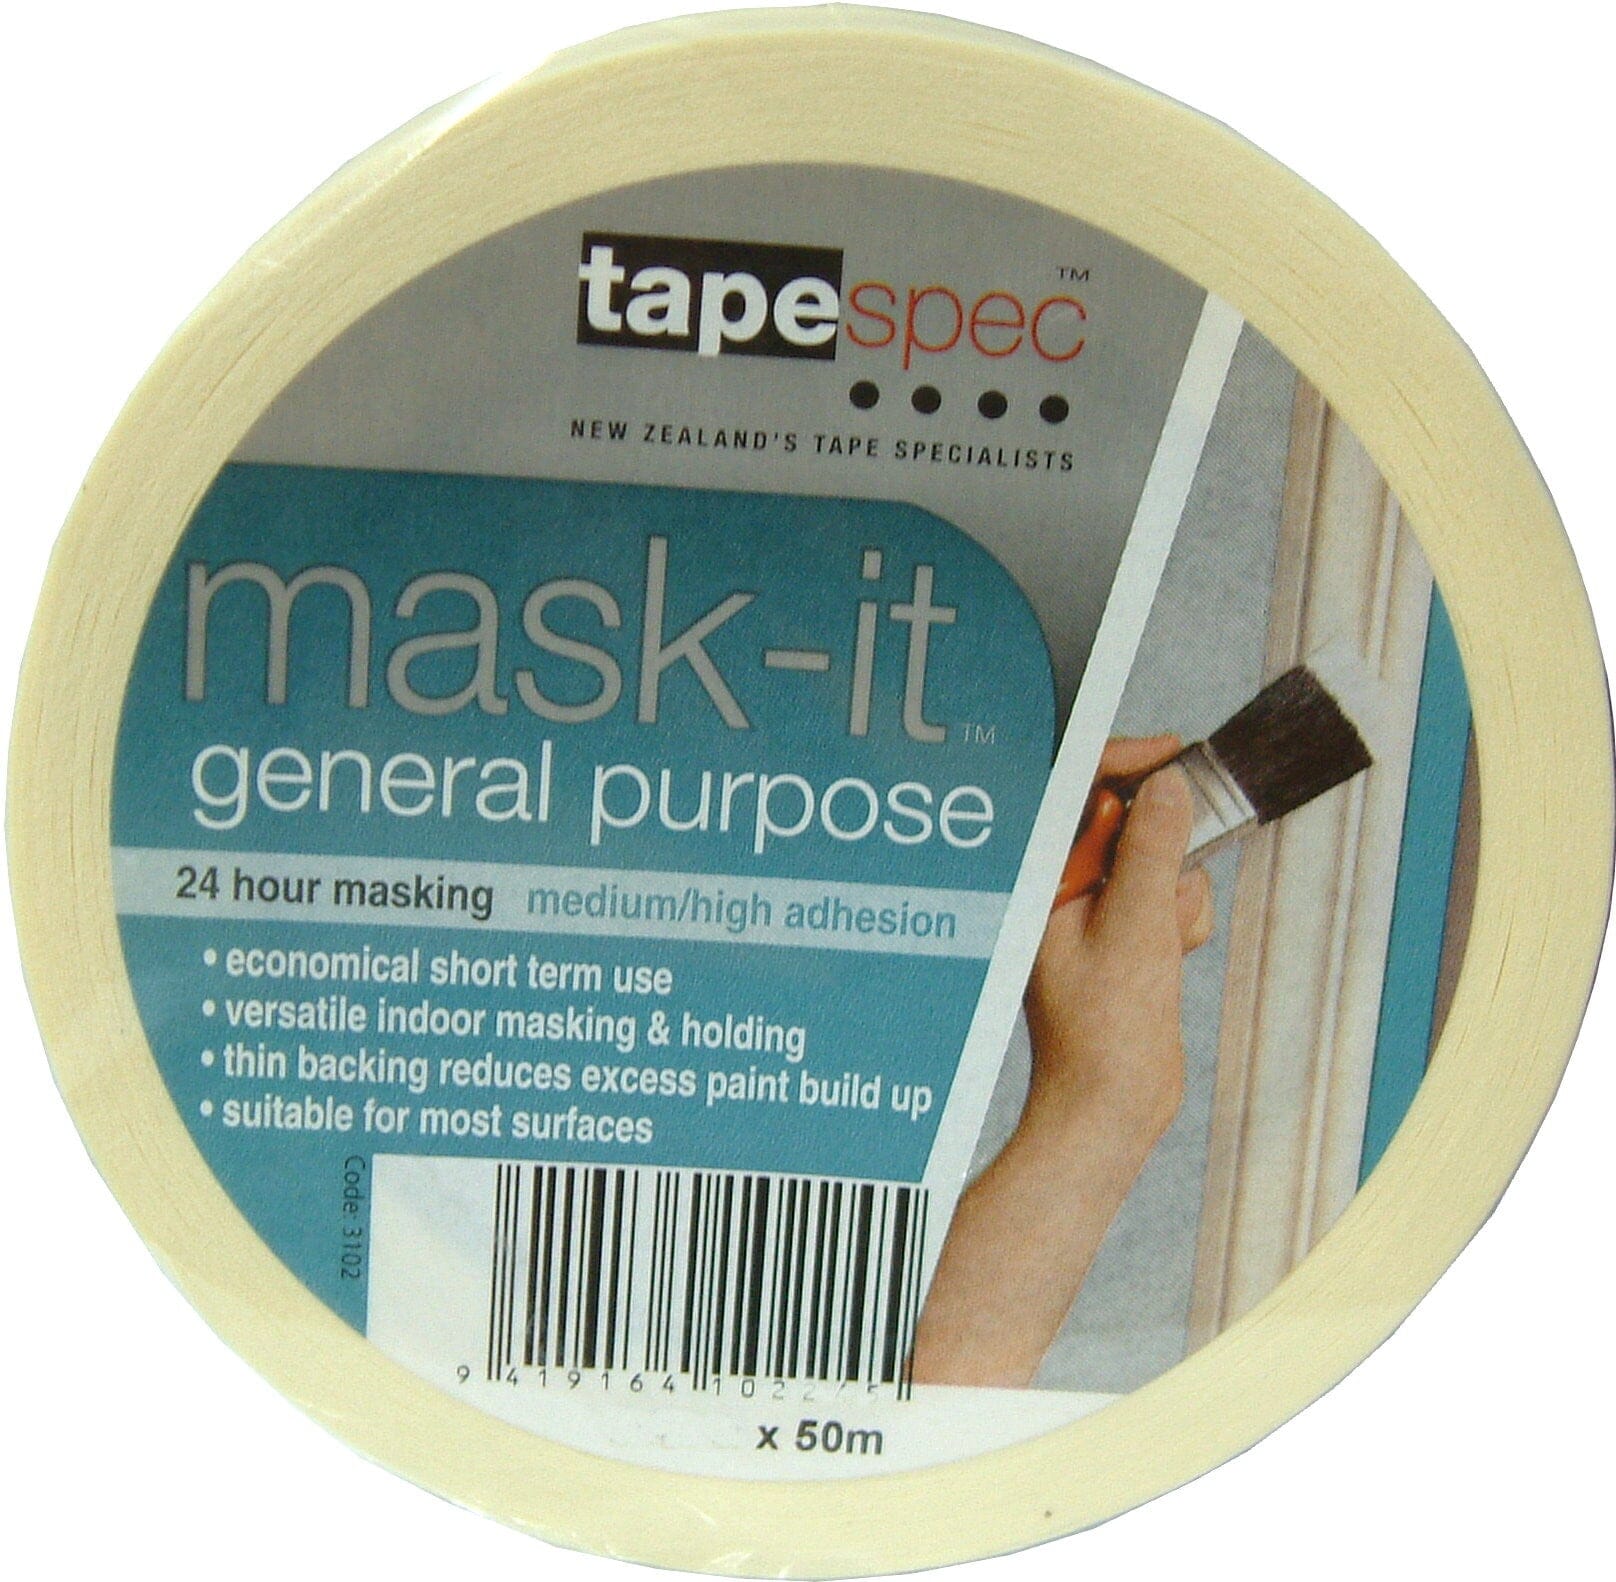 Tapespec Masking Tape - 50m Roll #312 18mm Mask-it